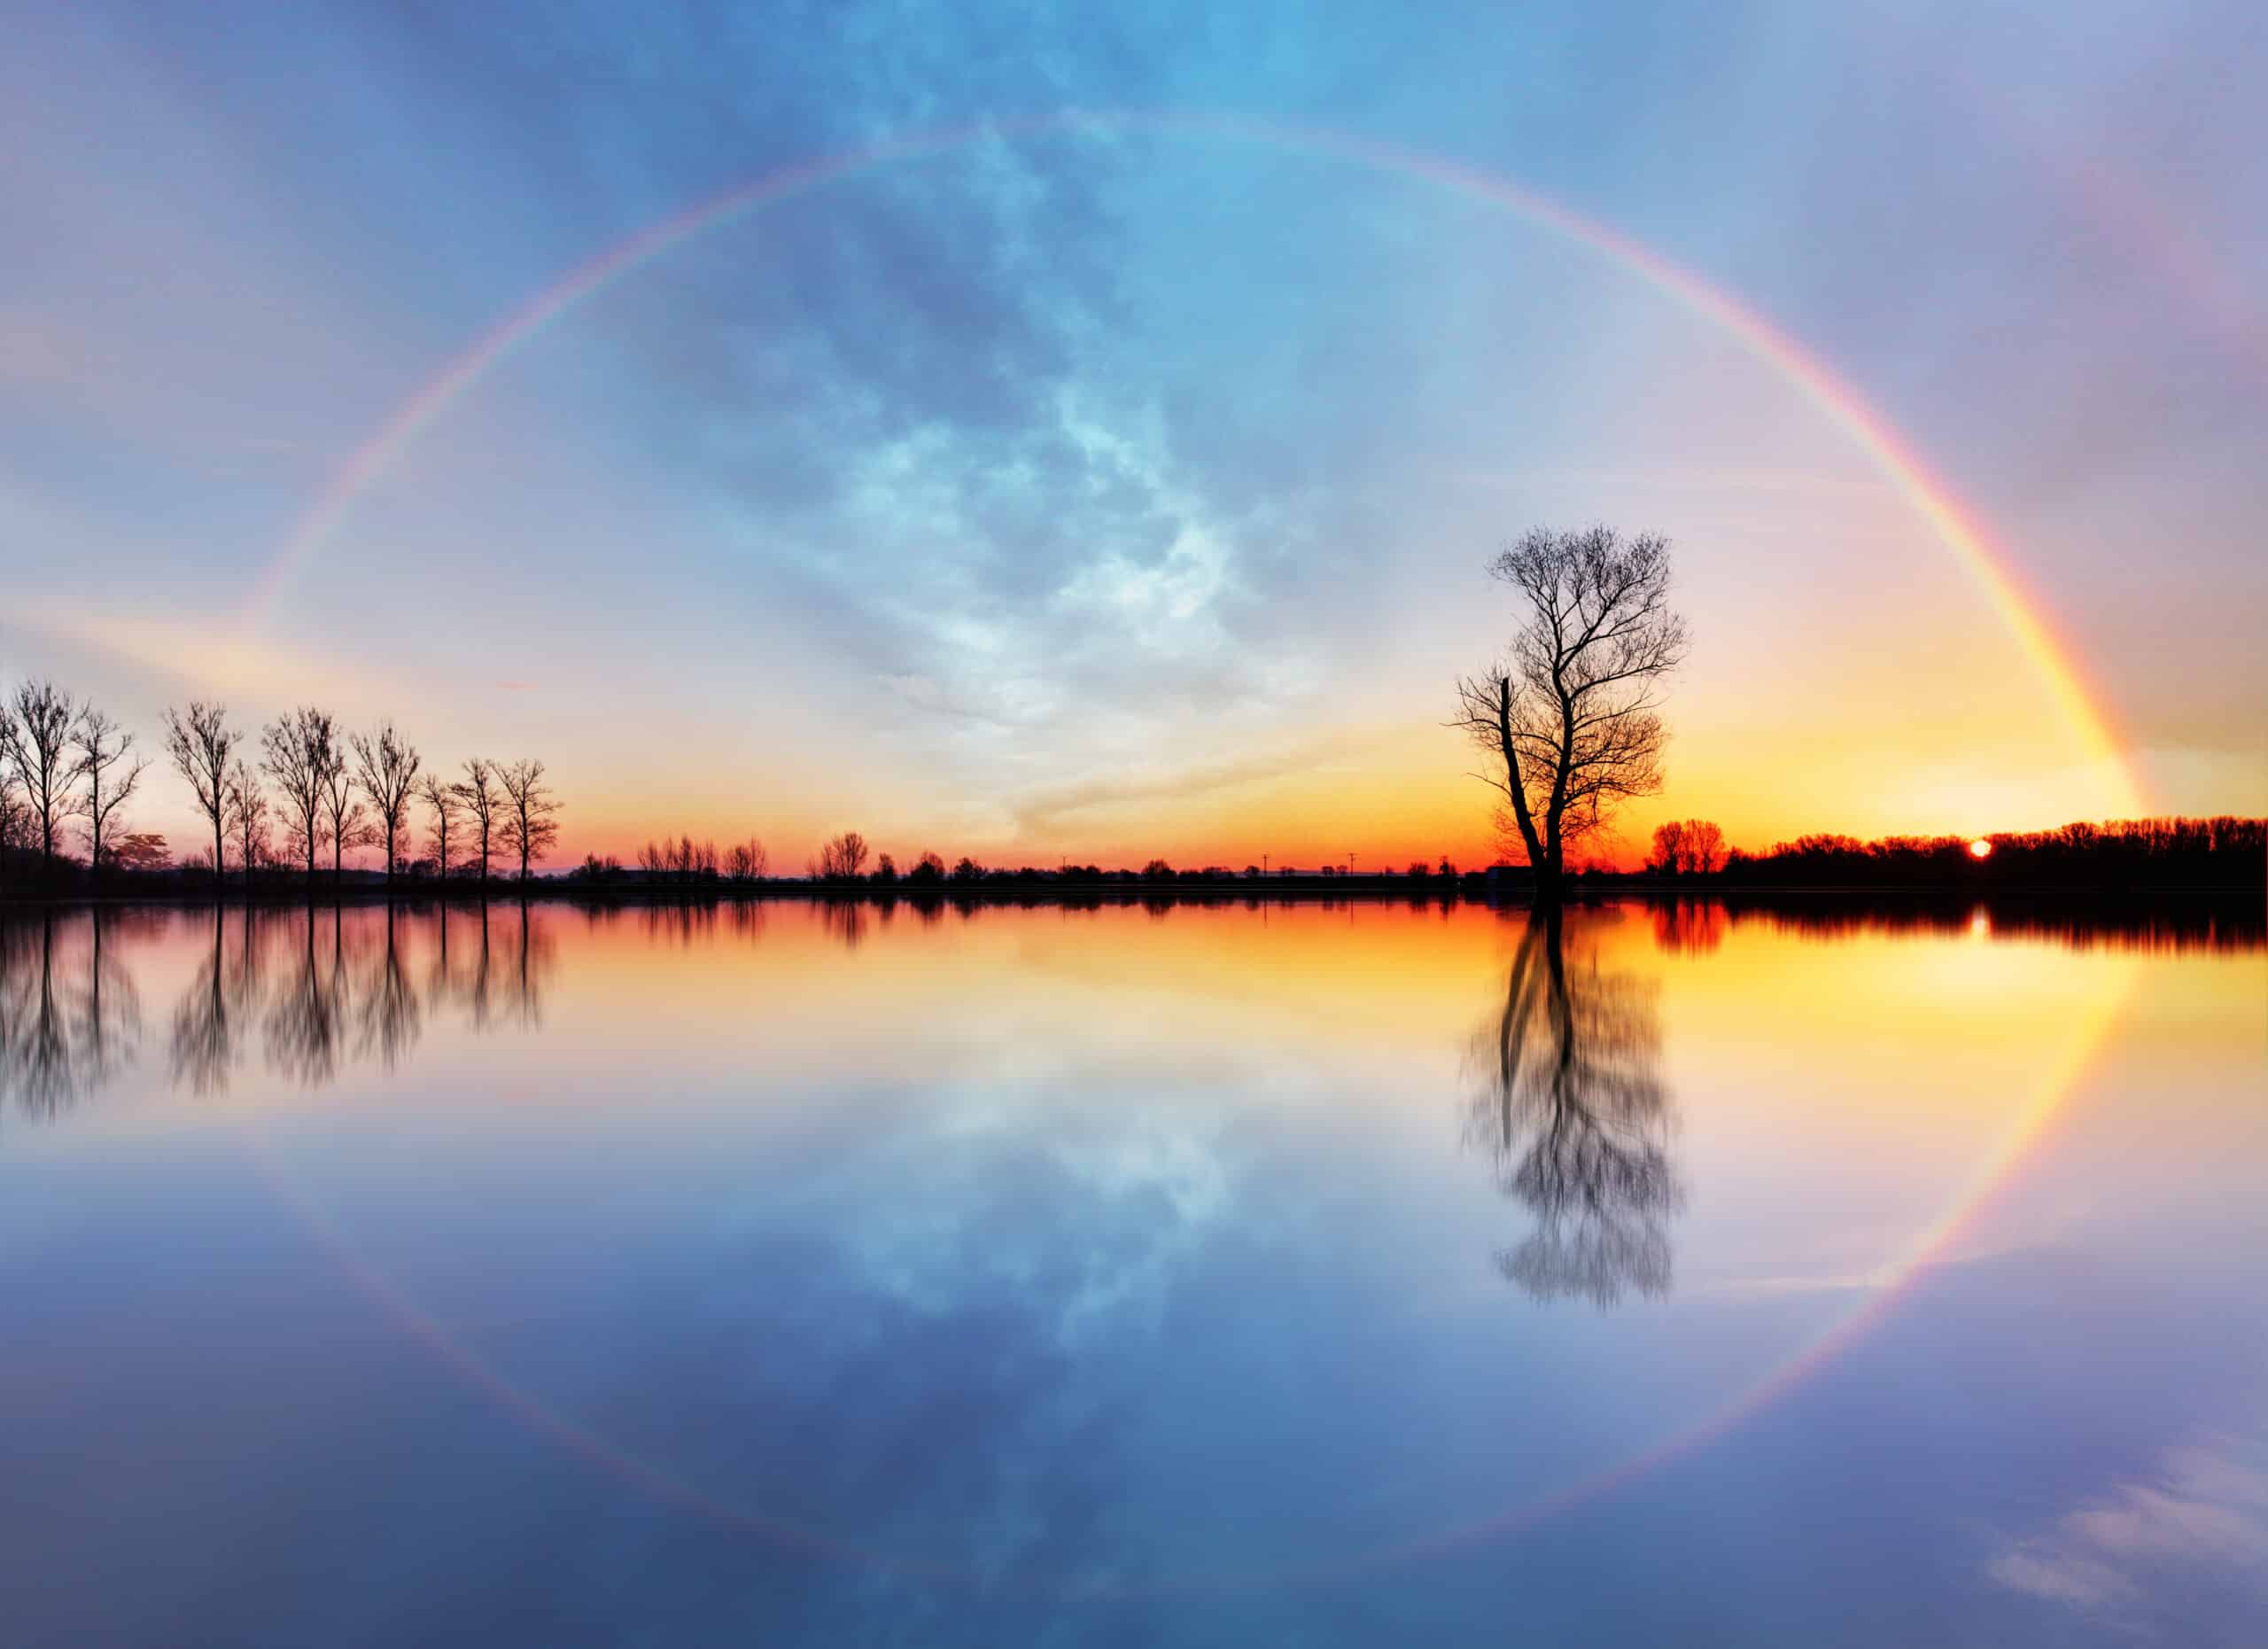 Tree and sun on lake sunrise, sun forming a rainbow-like halo across the sky